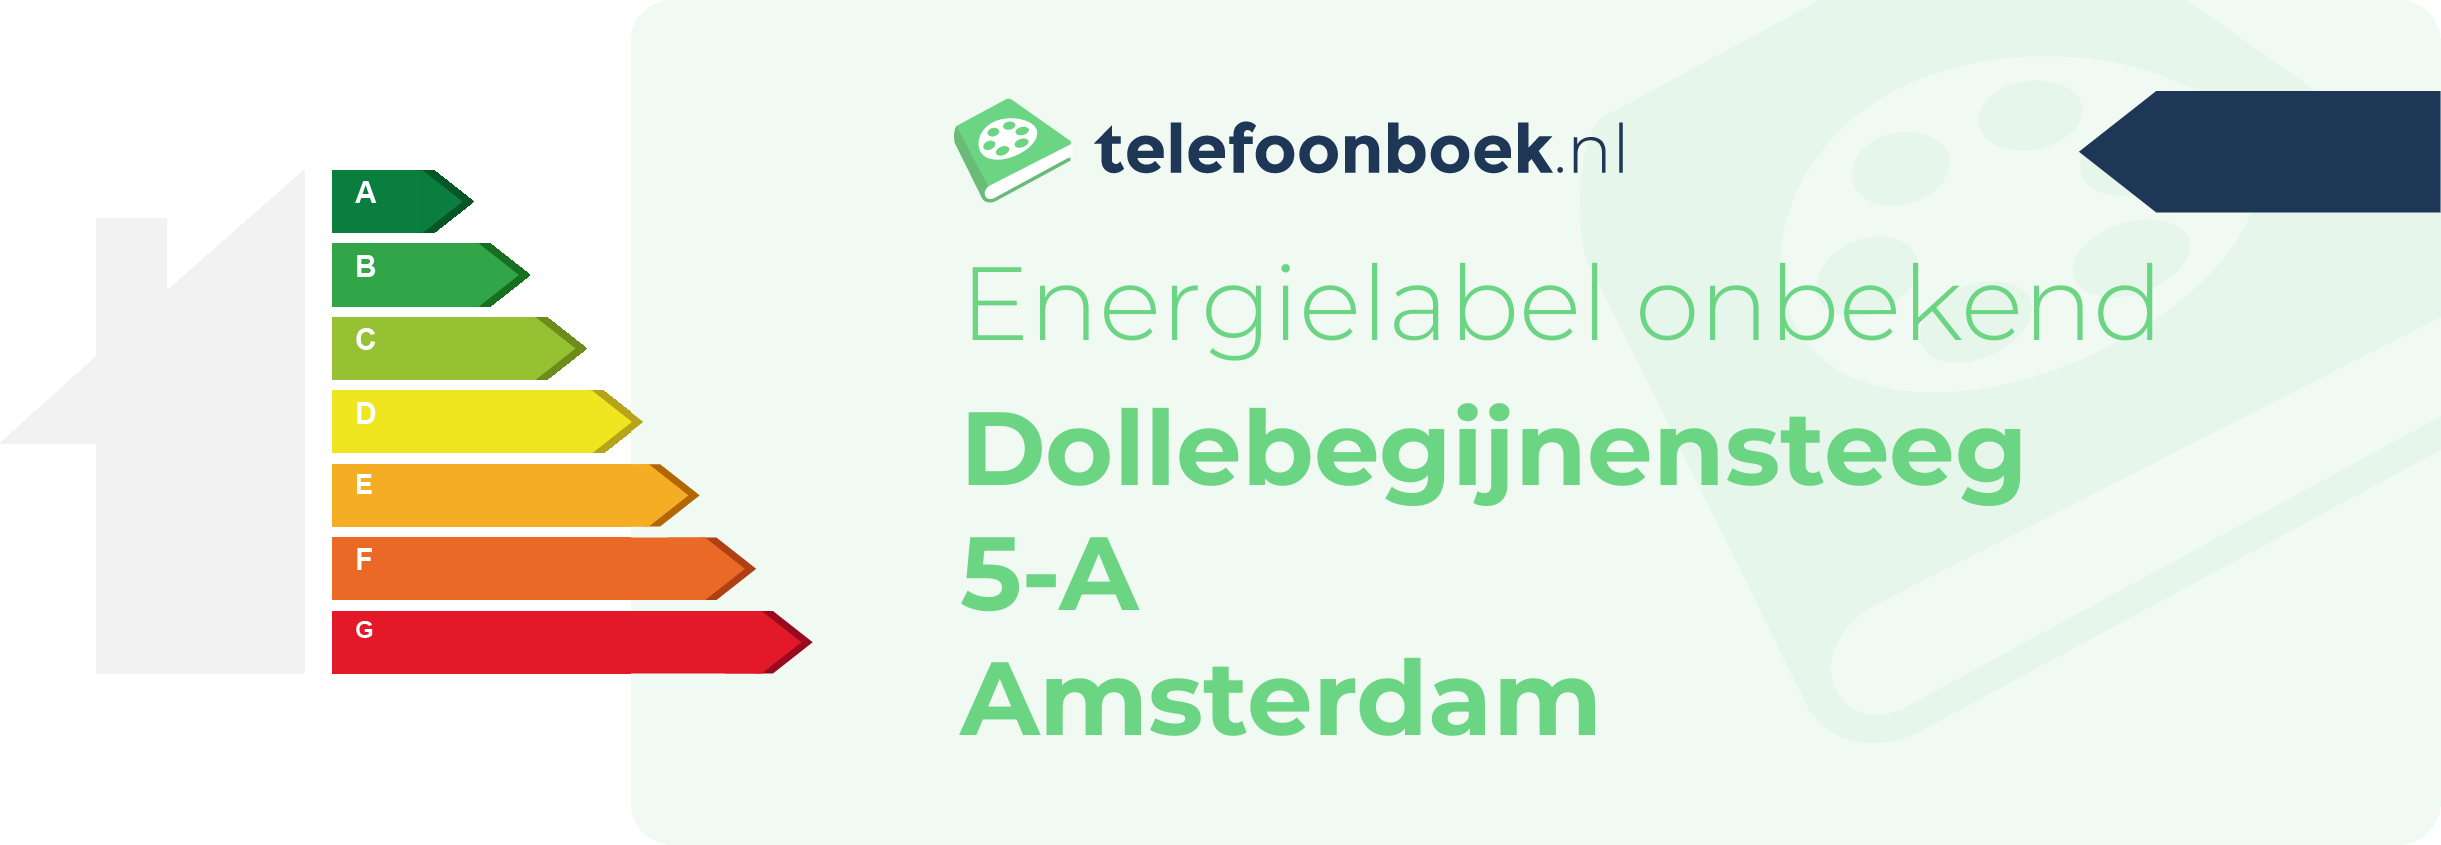 Energielabel Dollebegijnensteeg 5-A Amsterdam